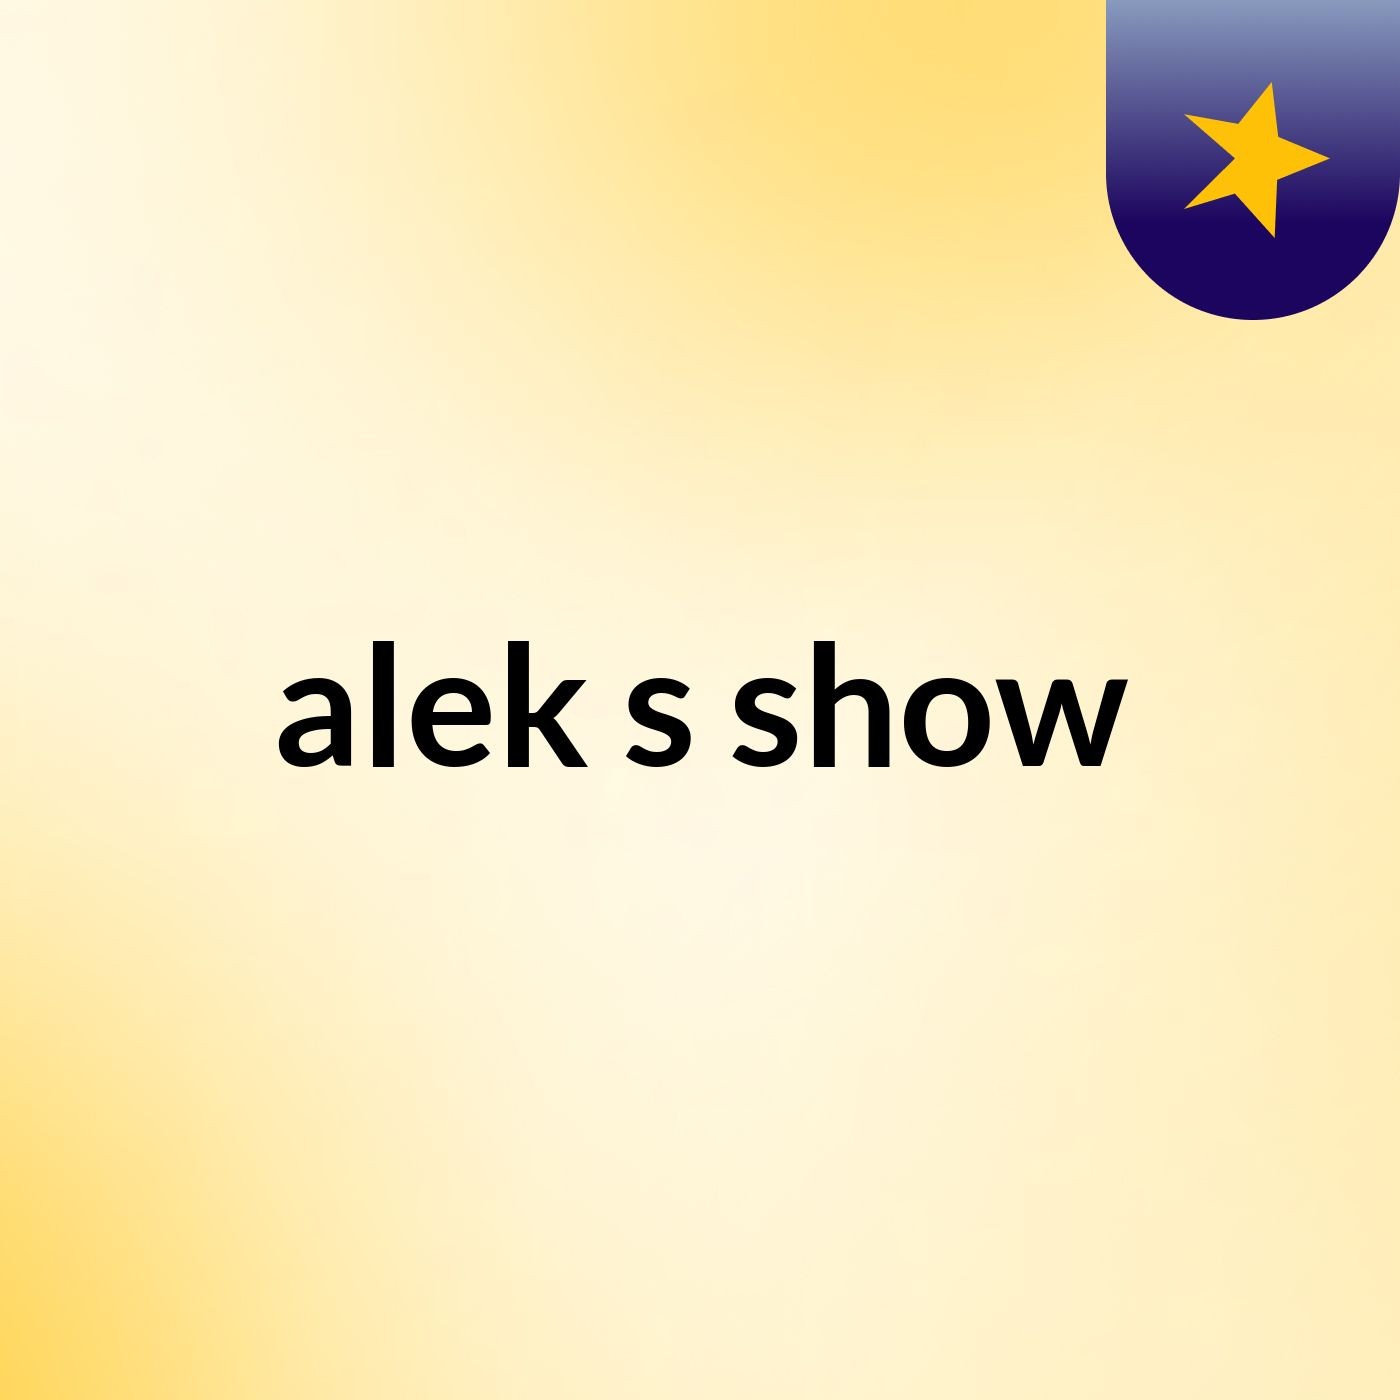 alek's show